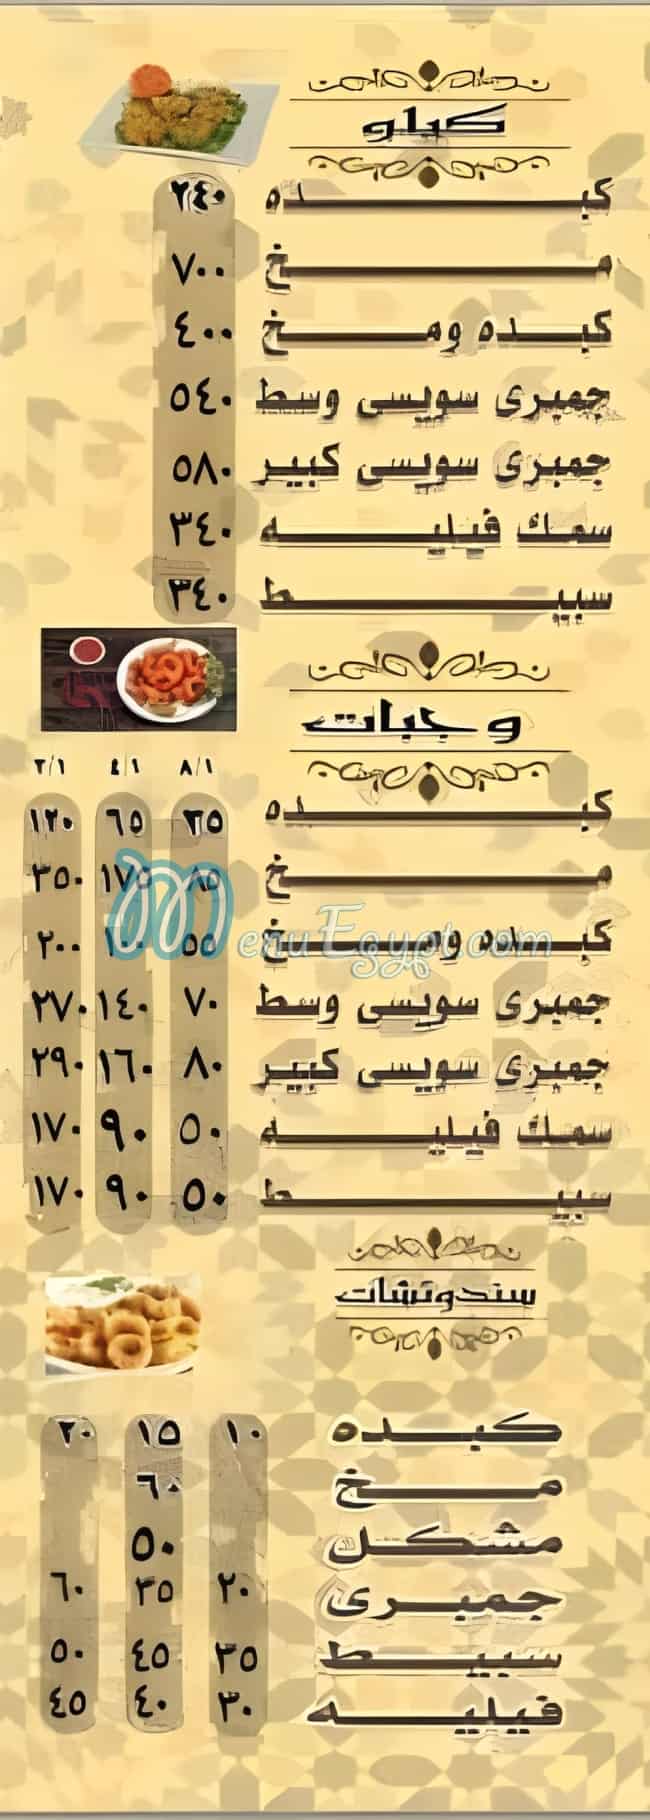 El Awam menu Egypt